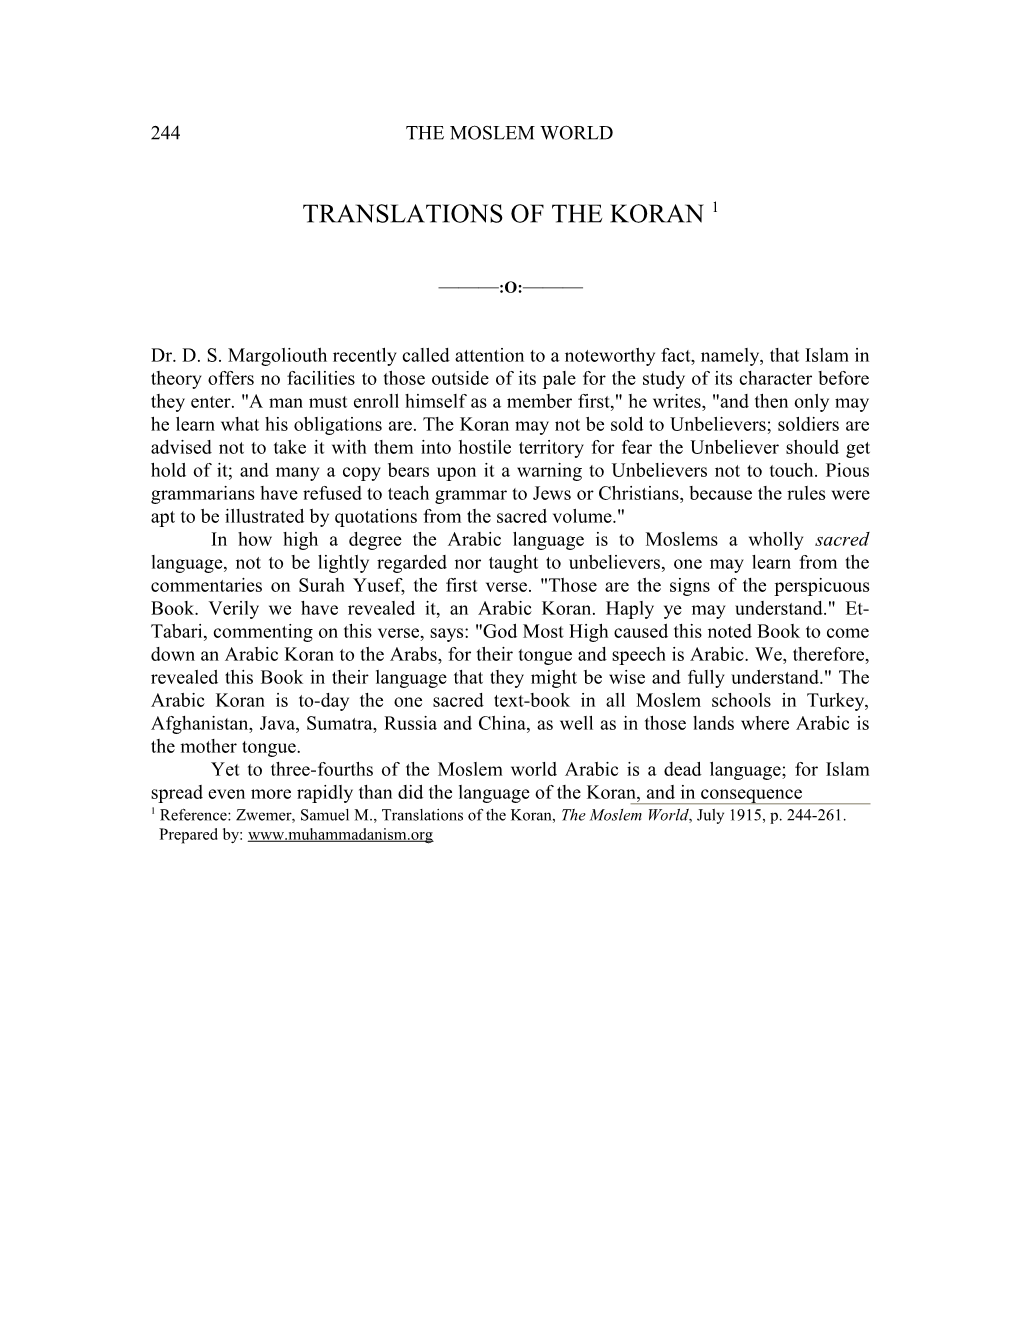 Translations of the Koran